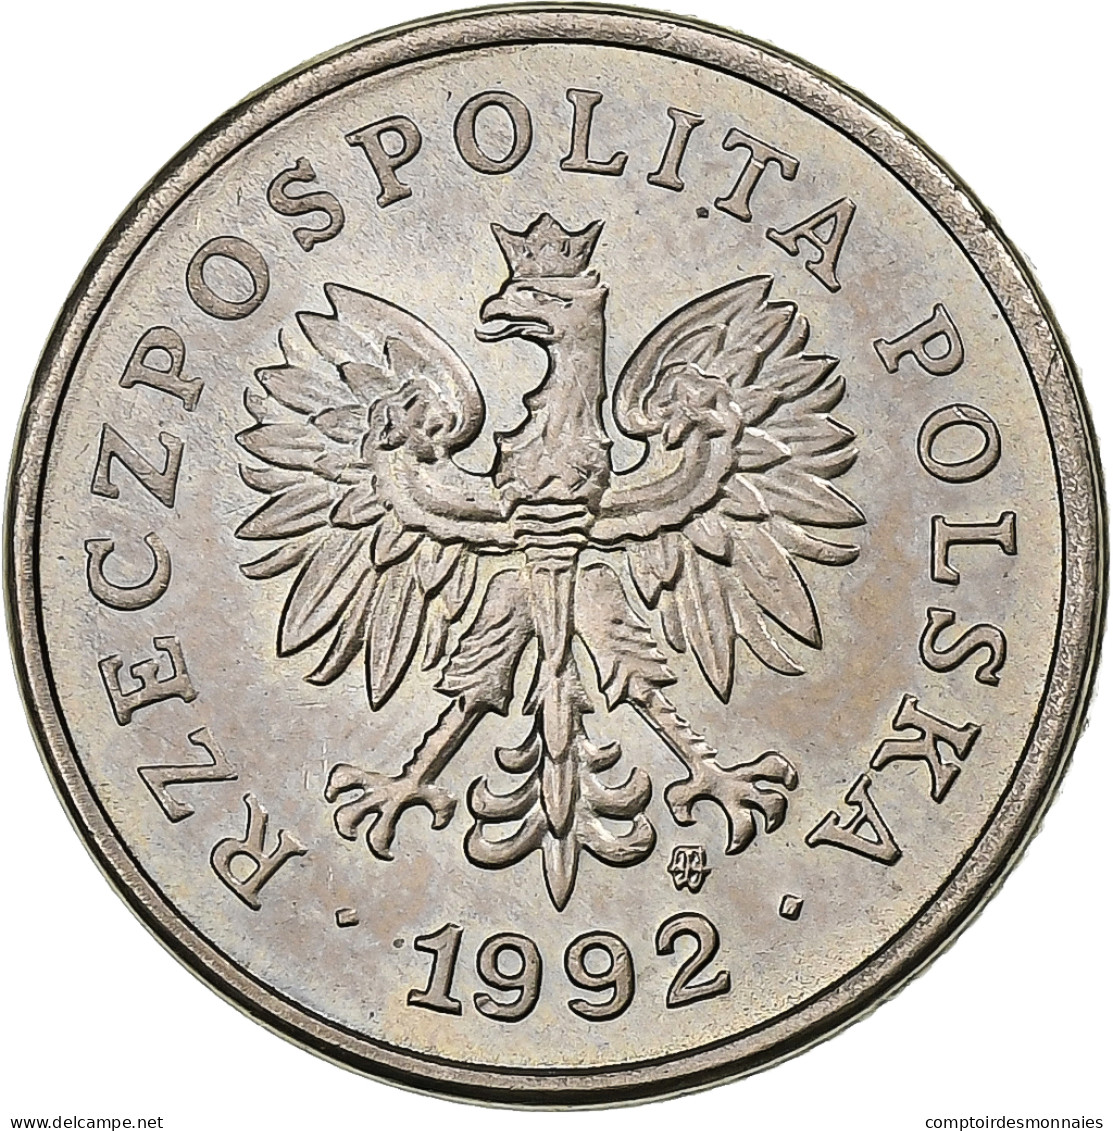 Pologne, 20 Groszy, 1992, Warsaw, Cupro-nickel, SUP, KM:280 - Poland